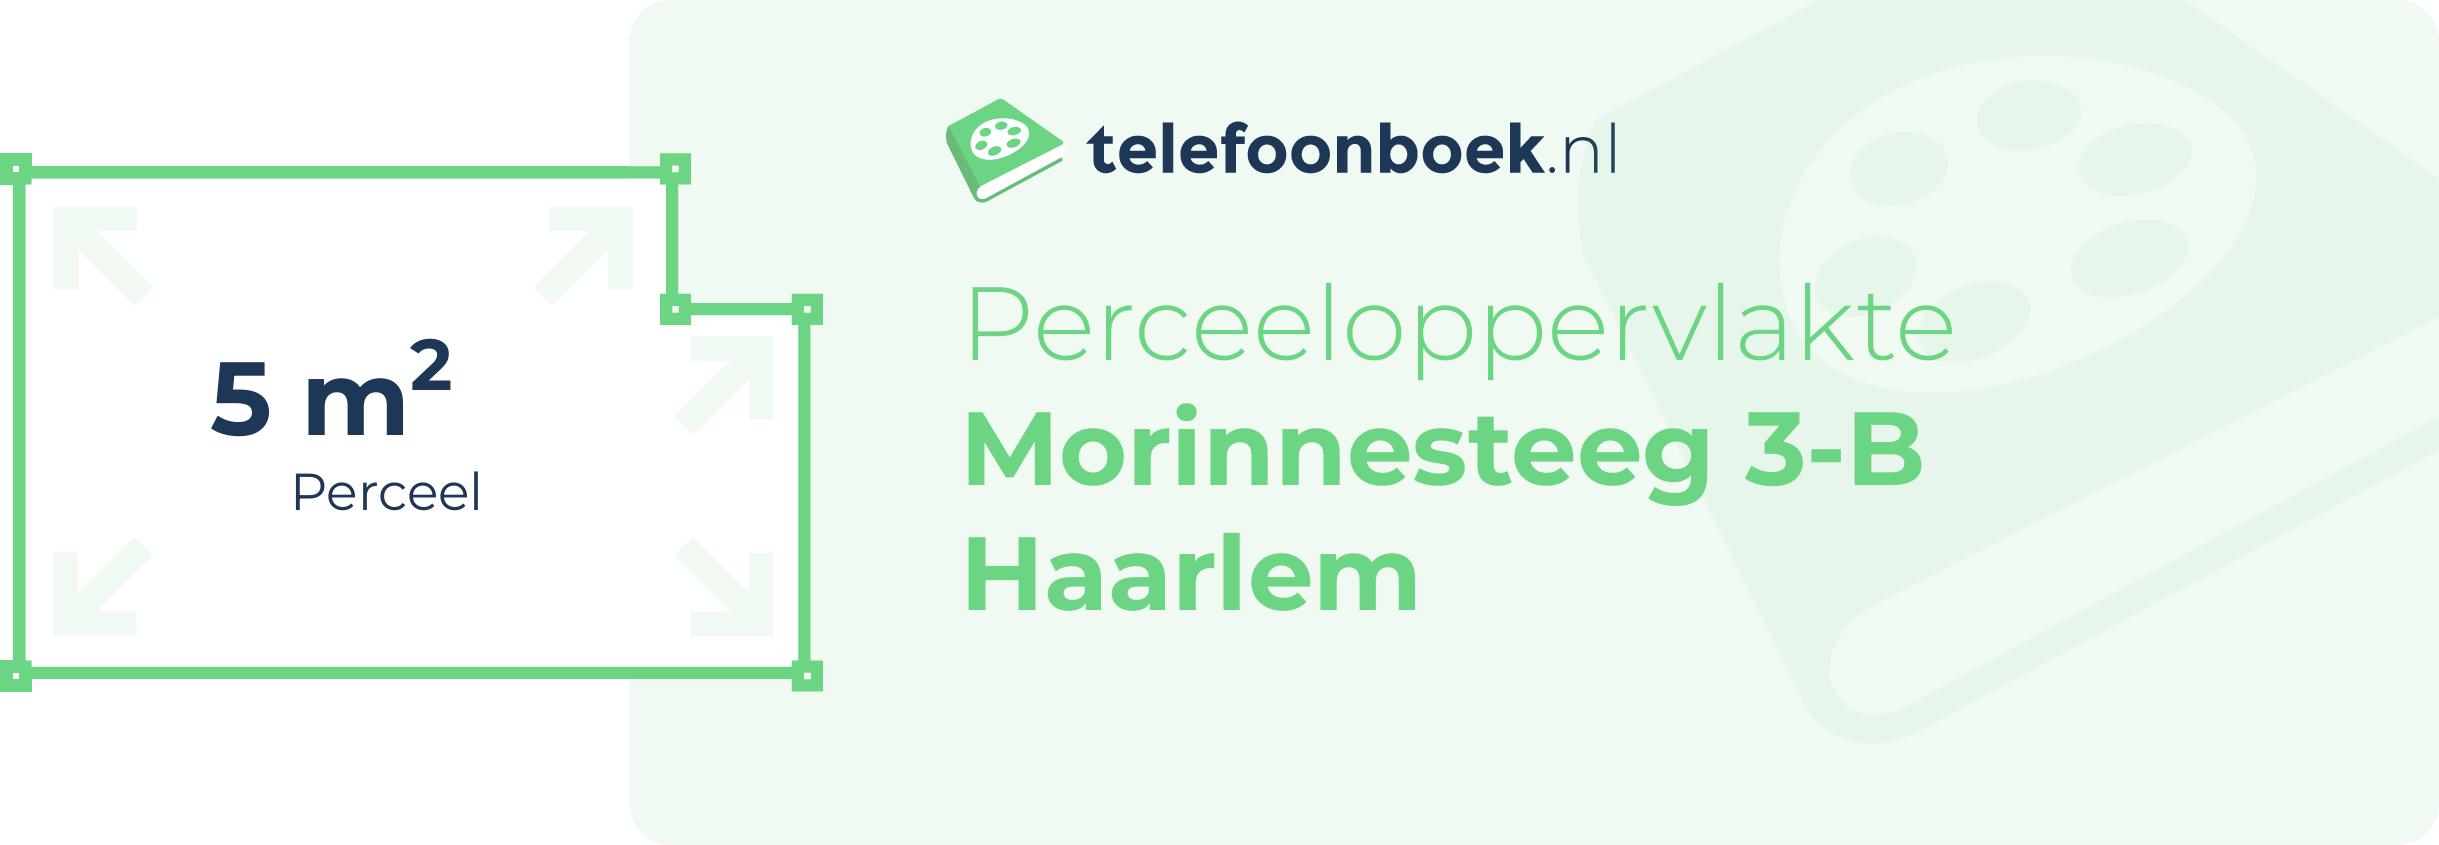 Perceeloppervlakte Morinnesteeg 3-B Haarlem